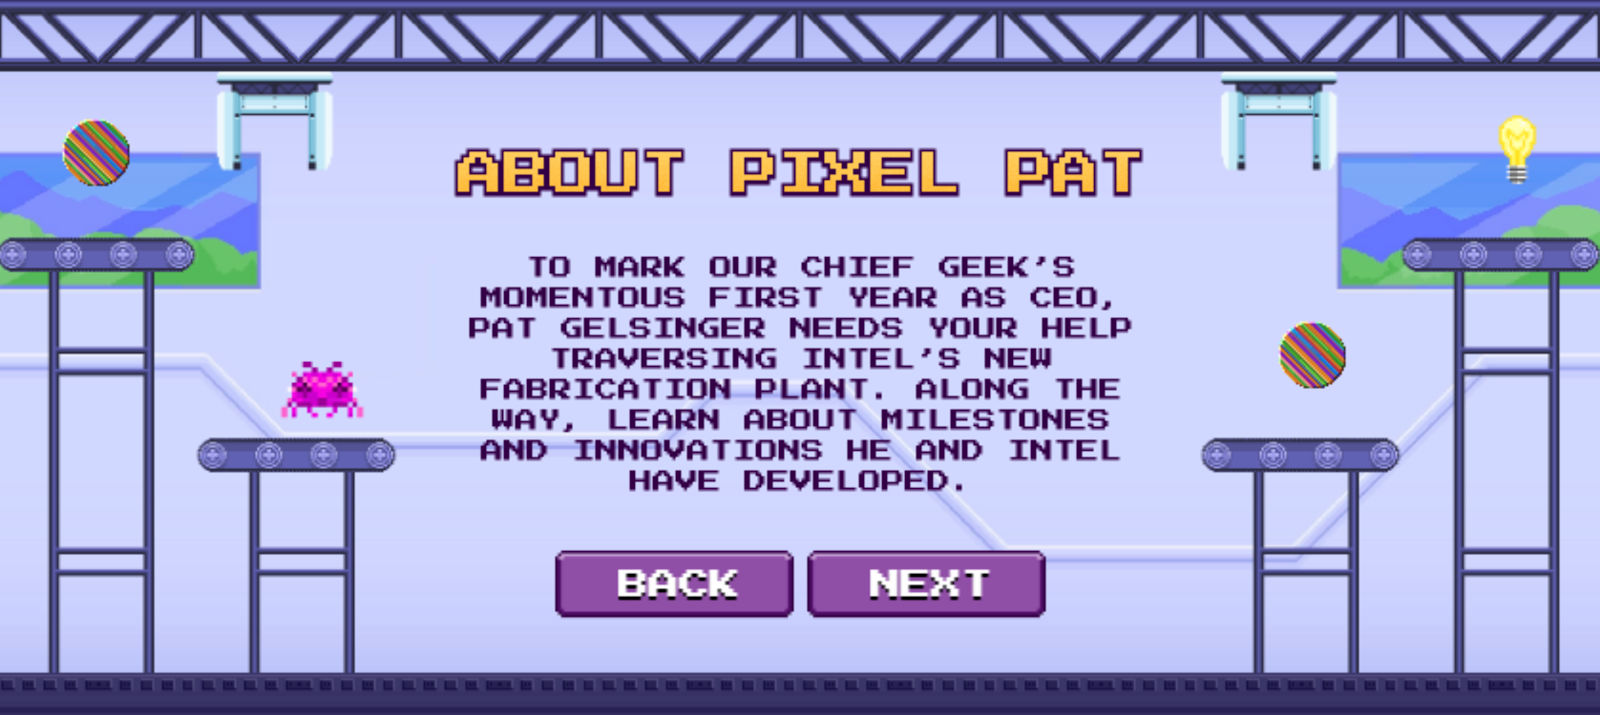 Pixel-Pat-2.jpg